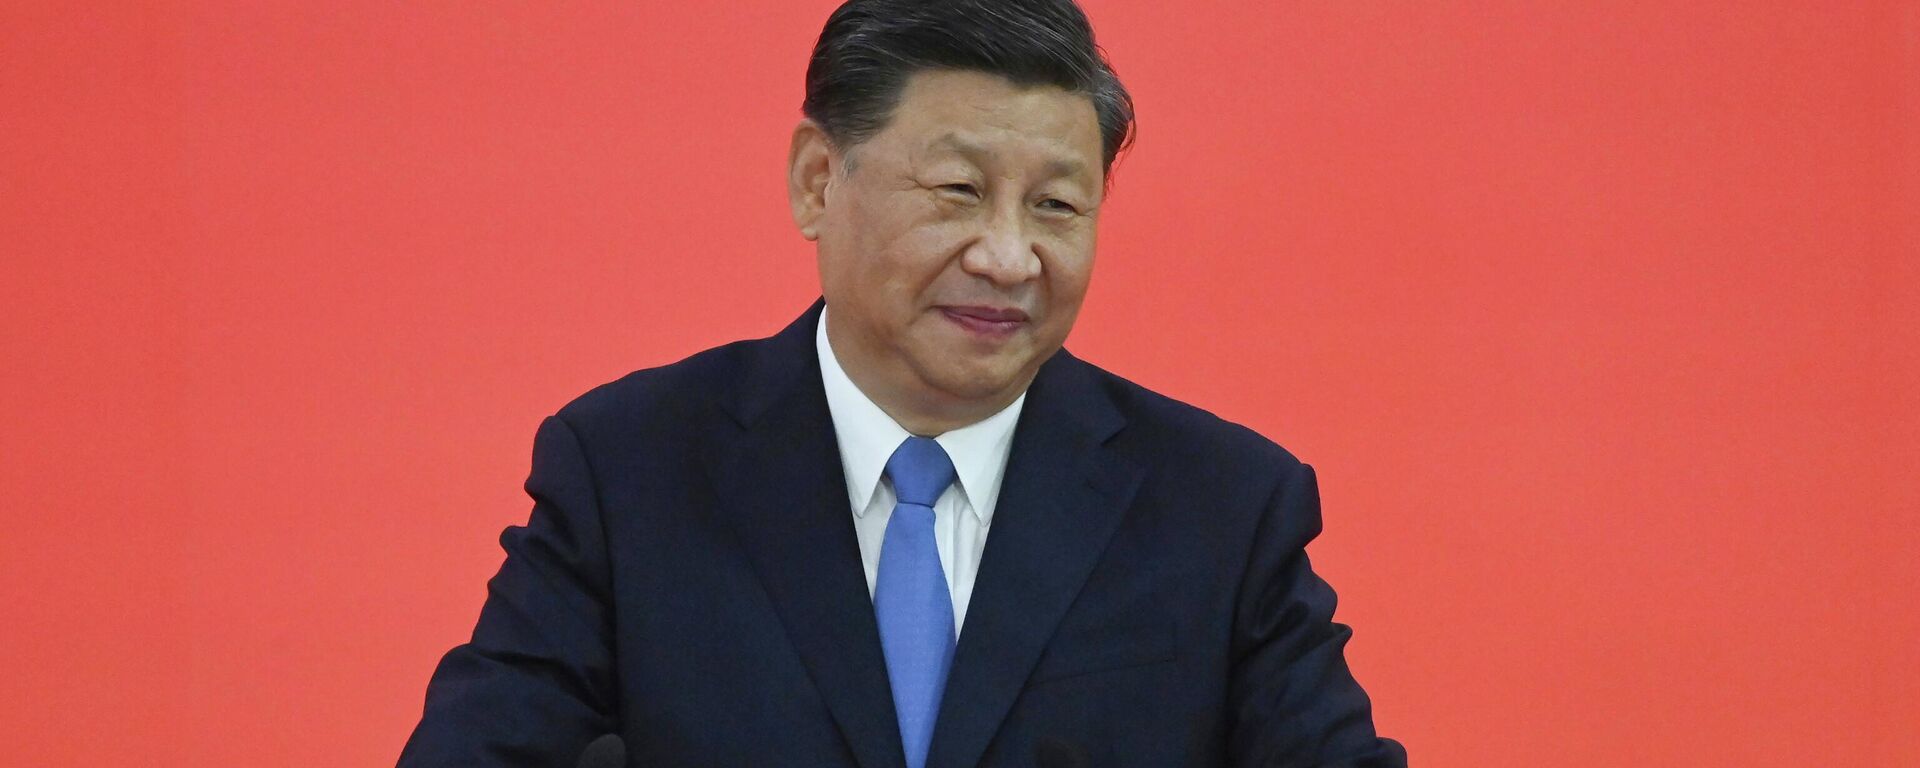 O presidente da China, Xi Jinping, discursa durante visita a Hong Kong, 30 de junho de 2022 - Sputnik Brasil, 1920, 10.08.2022